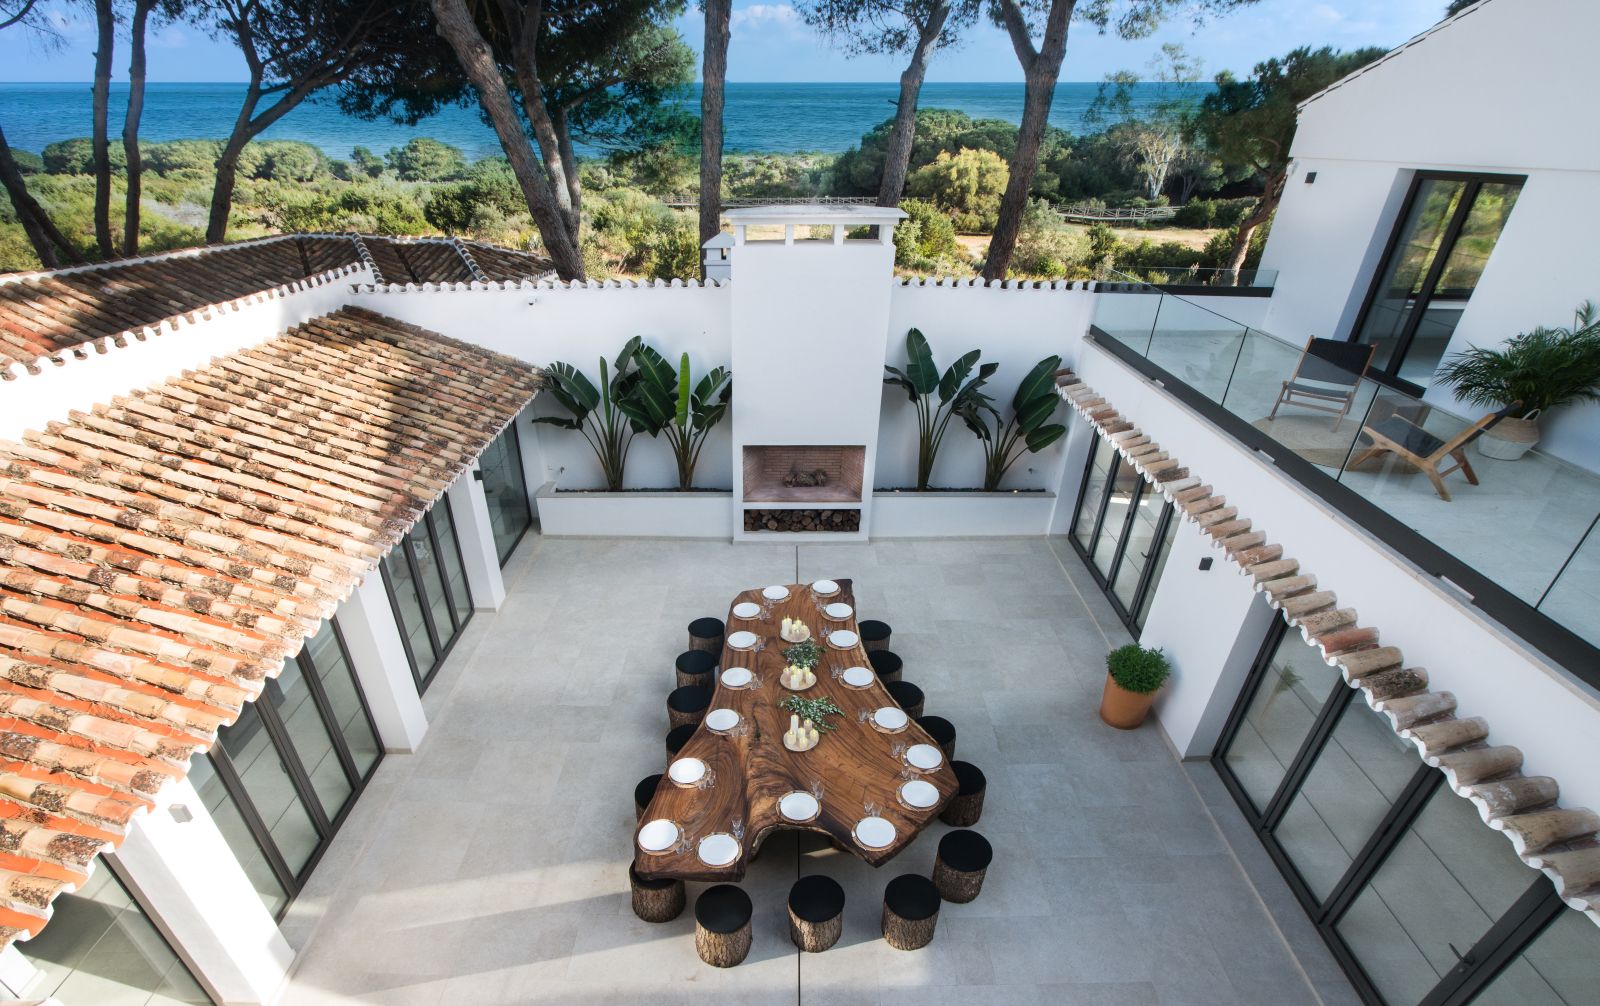 View of the terrace and beach at Villa Artola, near Marbella